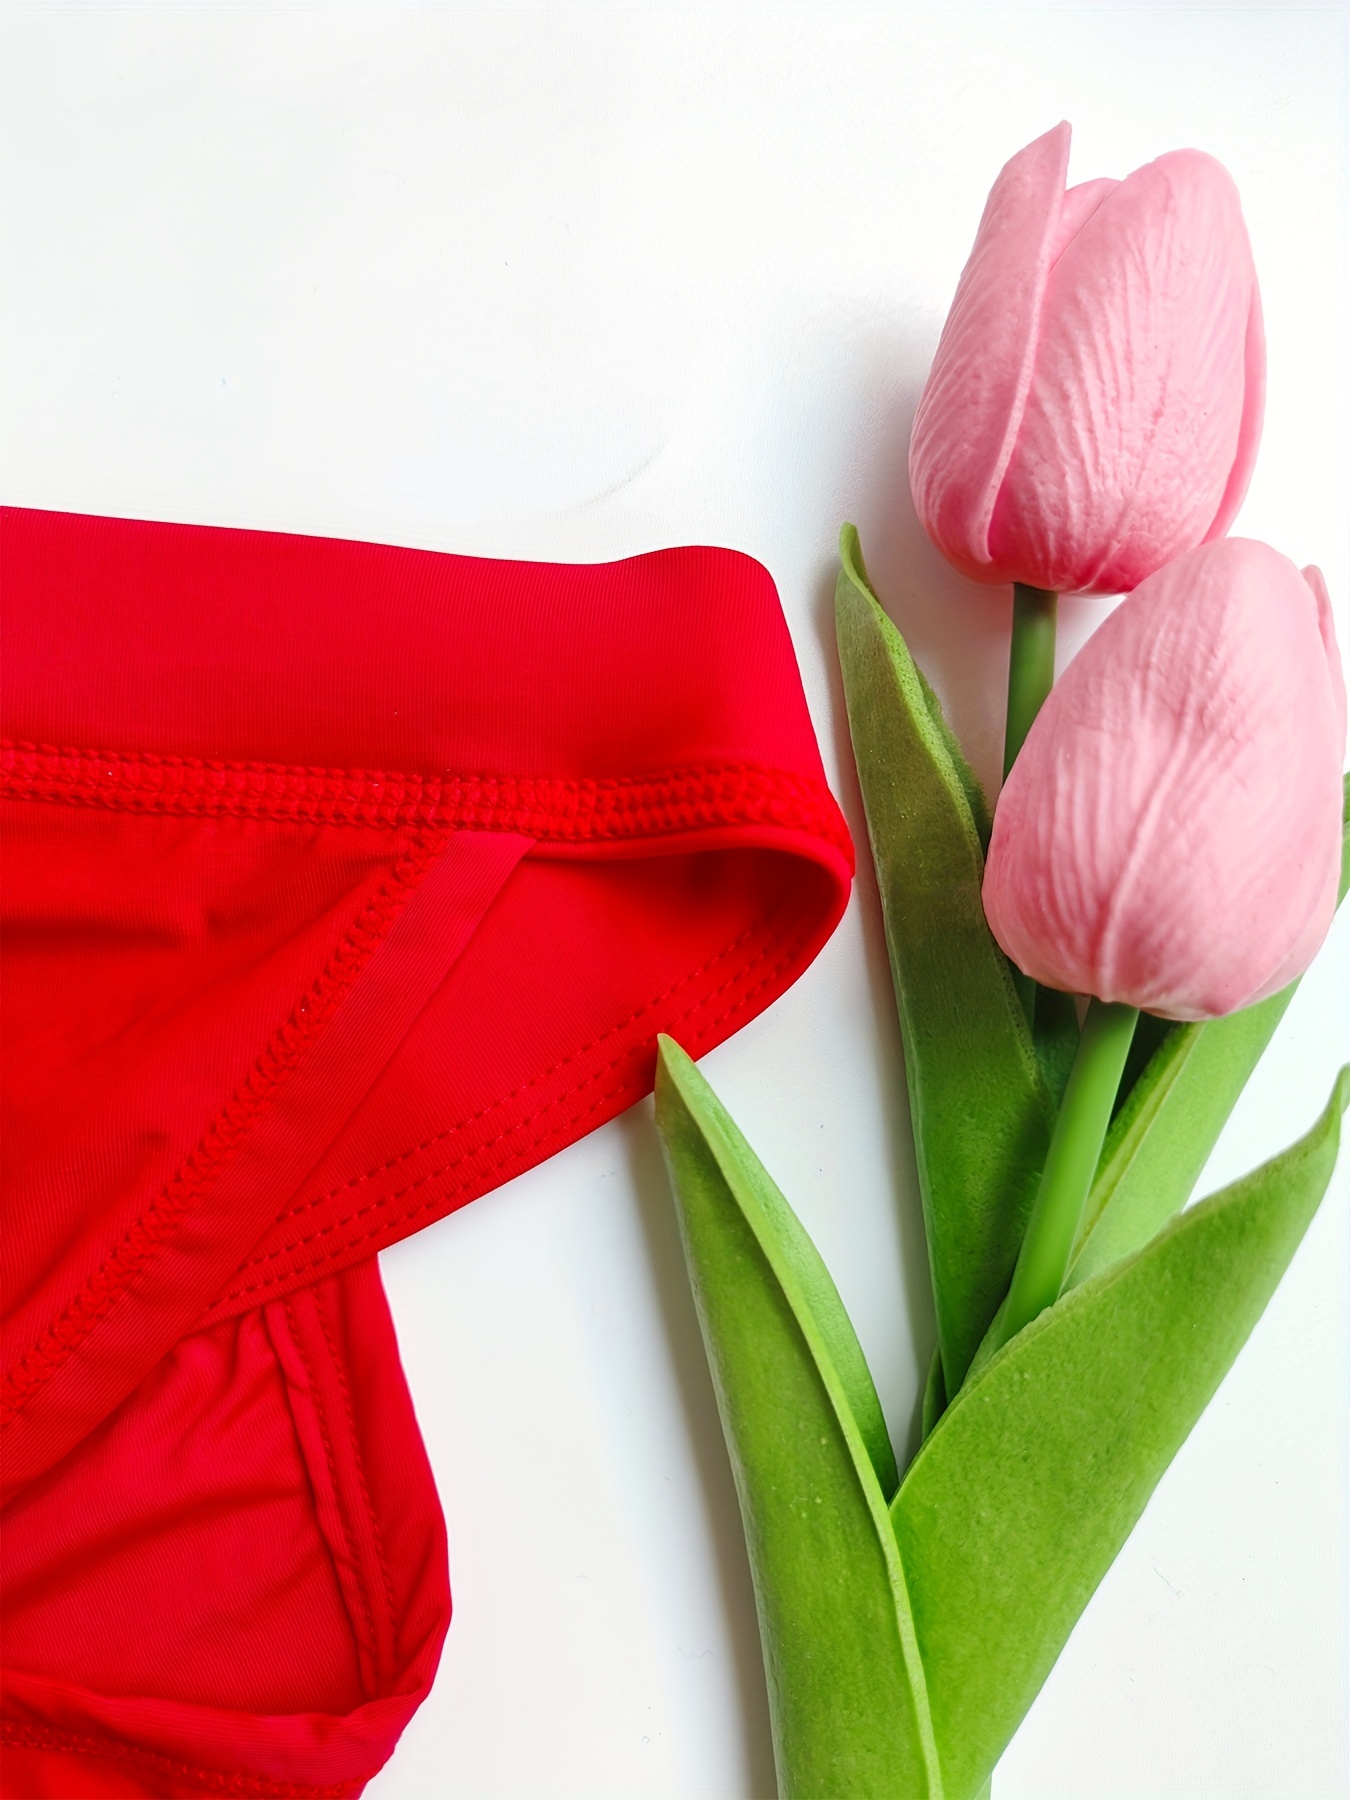 ✨PREORDER✨ Ice silk seamless underwear women's summer ultra-thin  quick-drying breathable high-waist antibacterial net red hot style -  HoneyBee Brunei